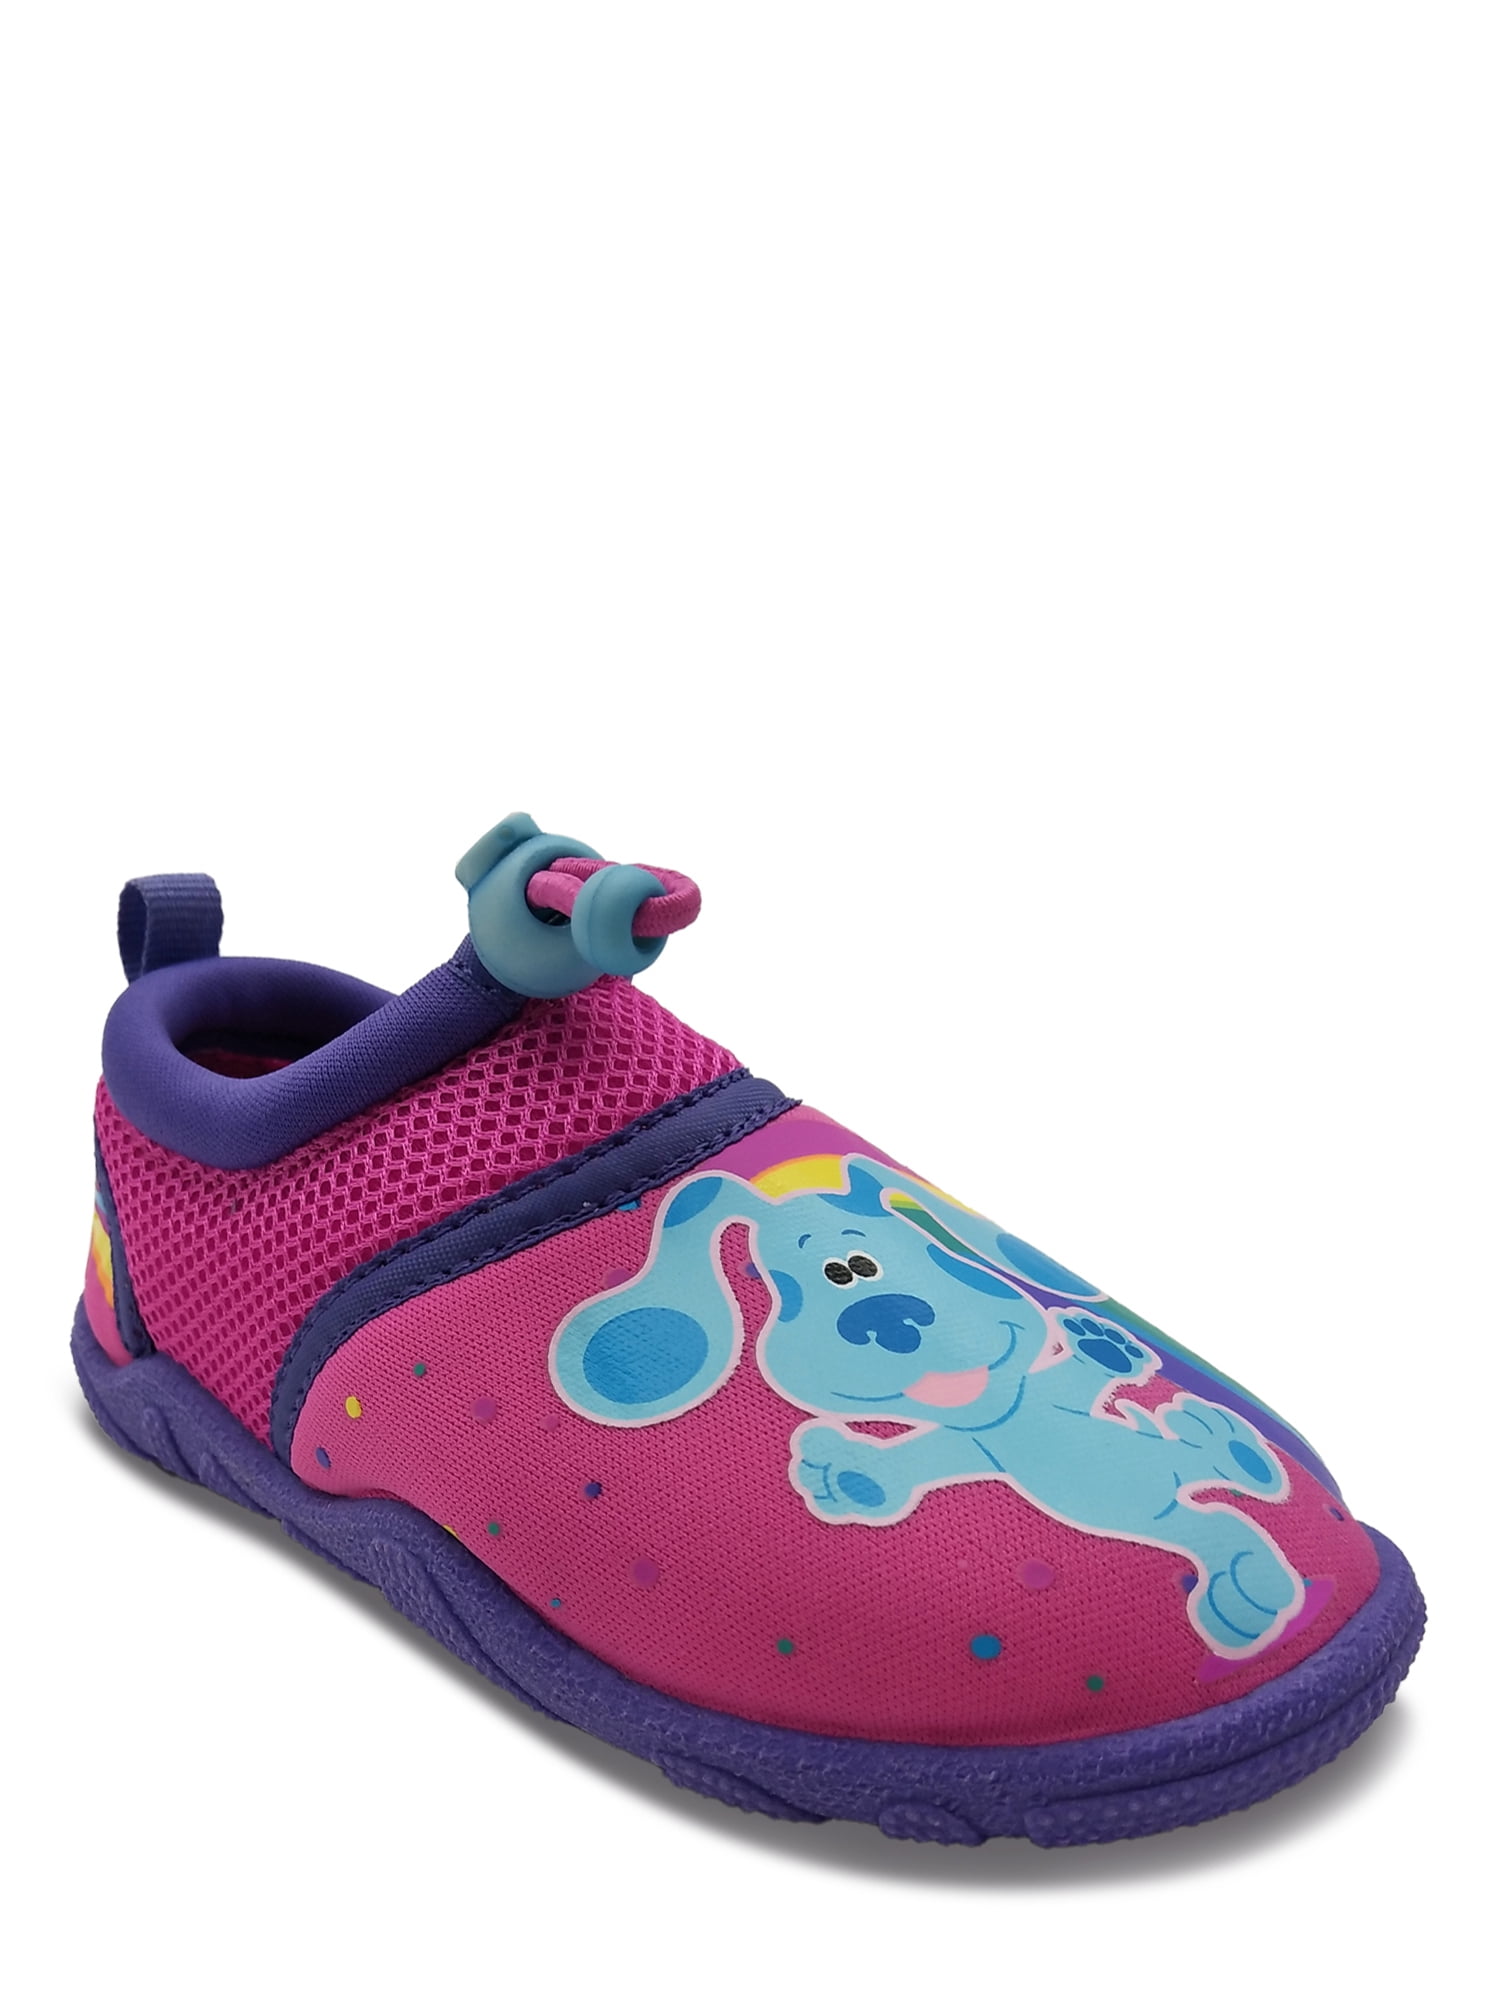 13-1 Water Beach Boys Girls Kids Shoes Slipper Size M-L 2-3 Various Colors 